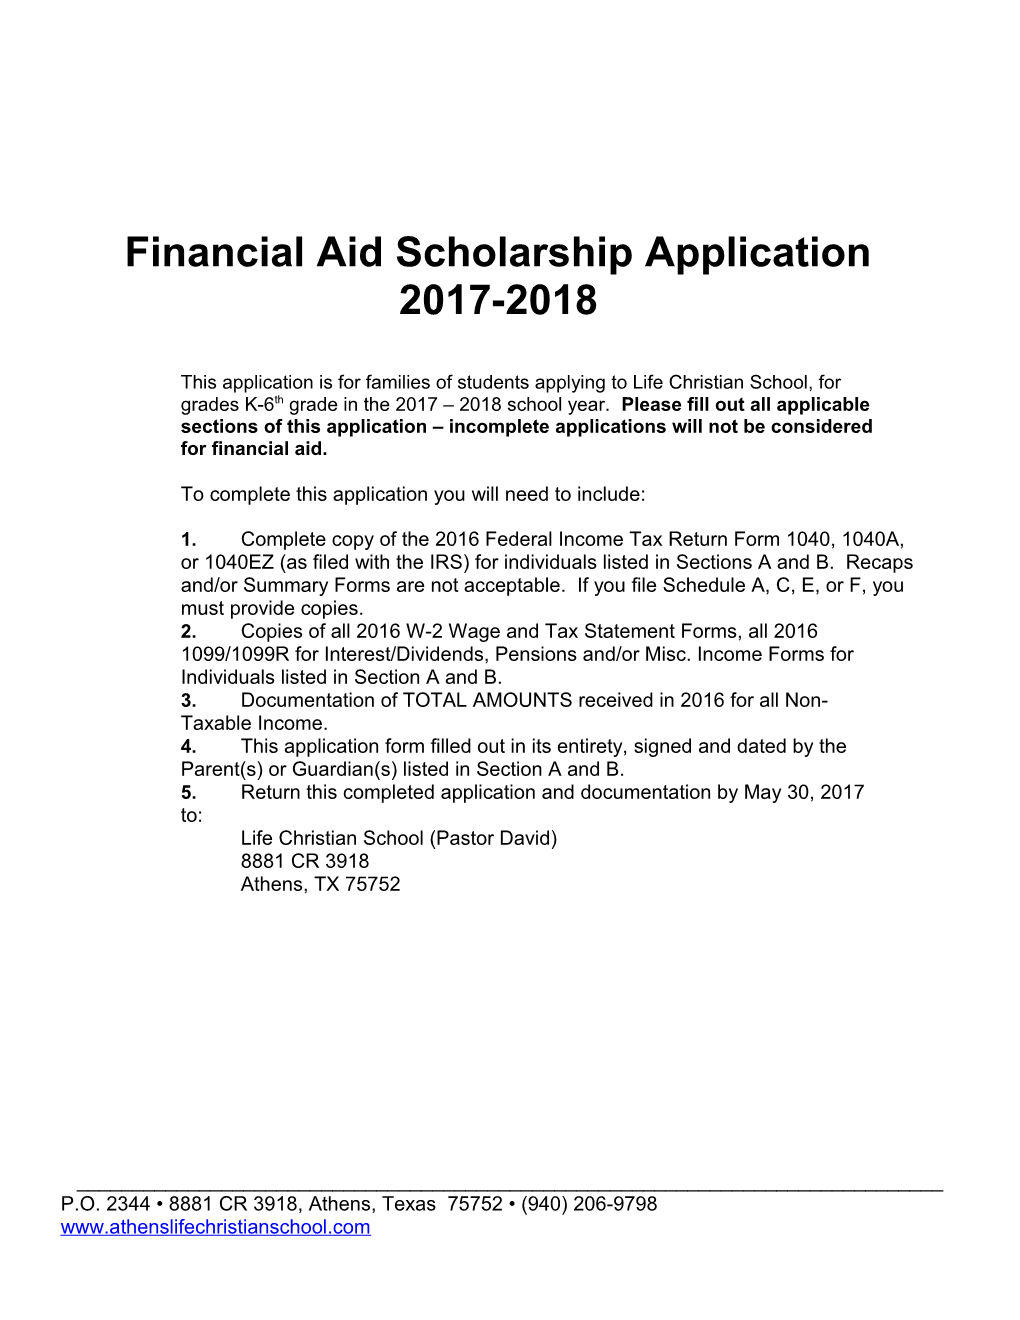 Financial Aid Scholarship Application 2017-2018